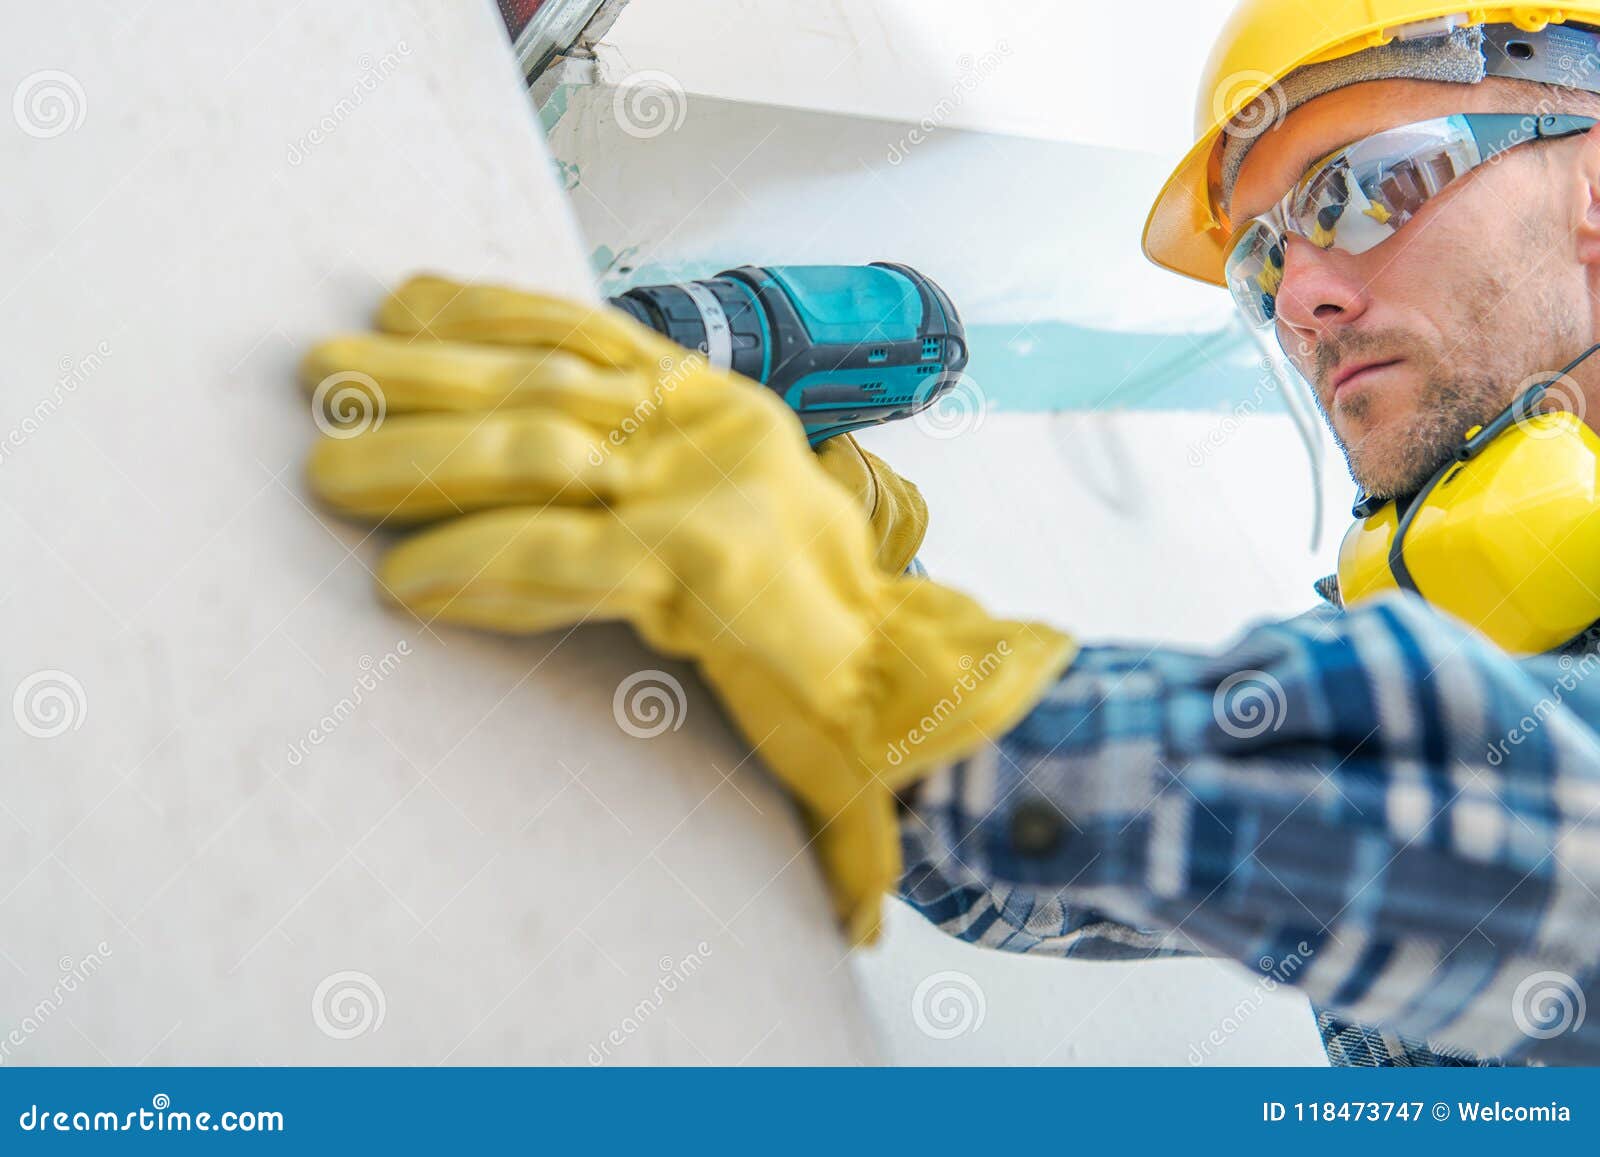 contractor remodeling job